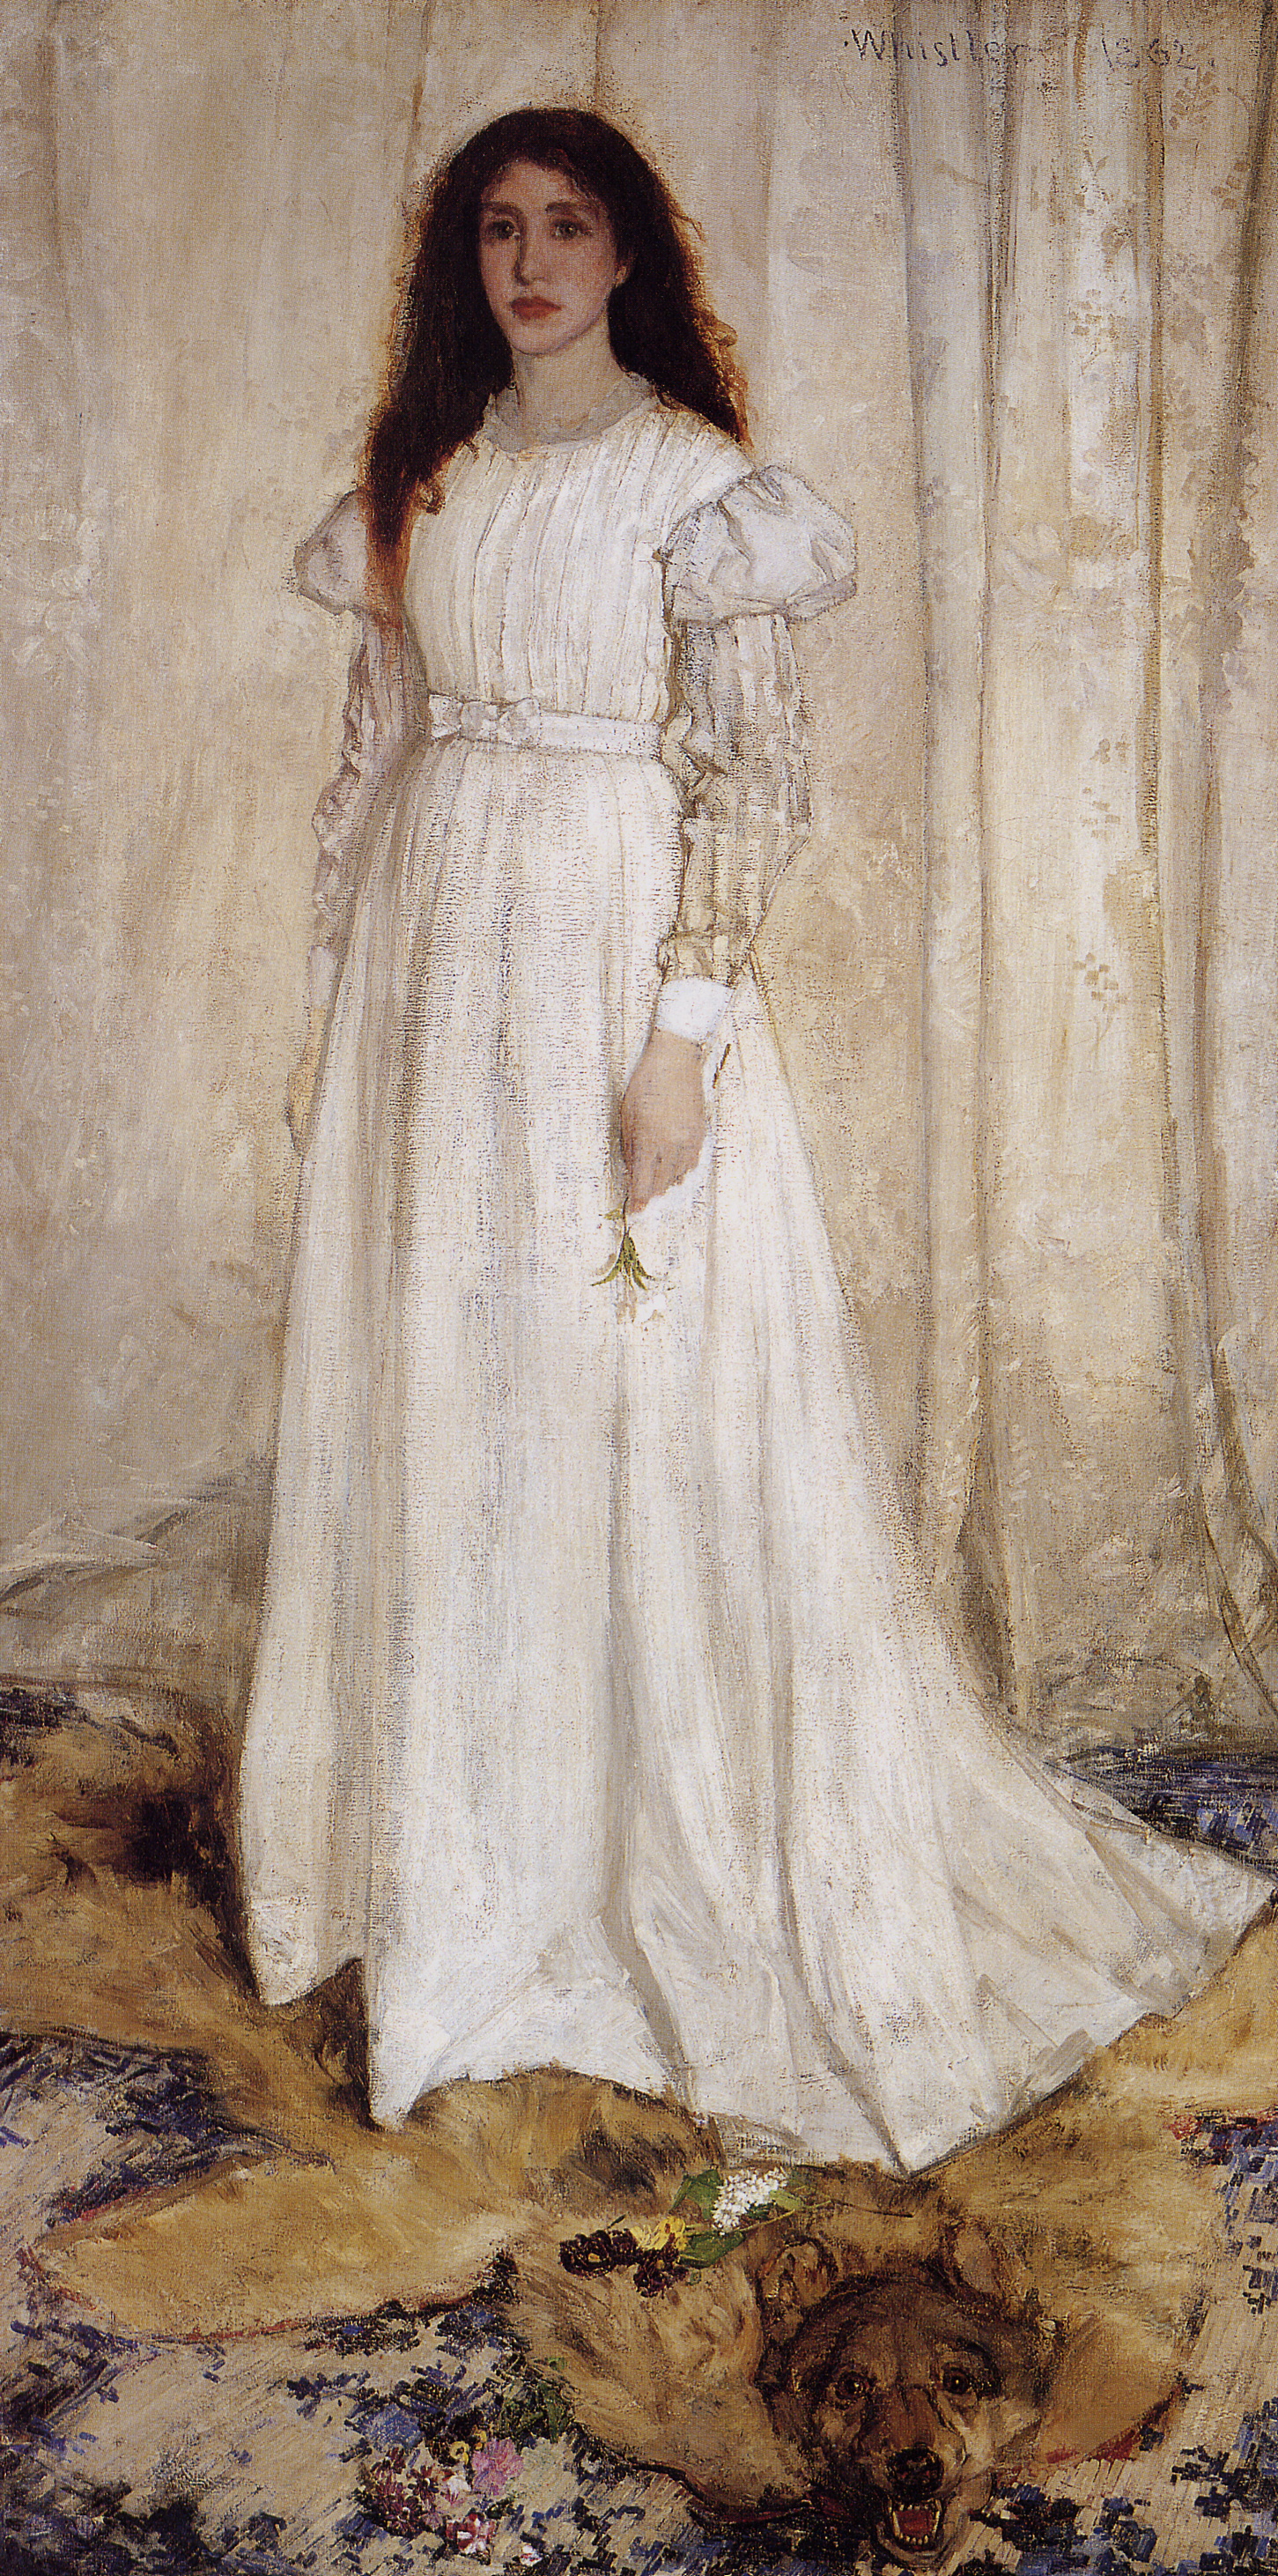 Sinfonía en Blanco, No. 1: La Dama Blanca by James Abbott McNeill Whistler - 1861-1862 National Gallery of Art